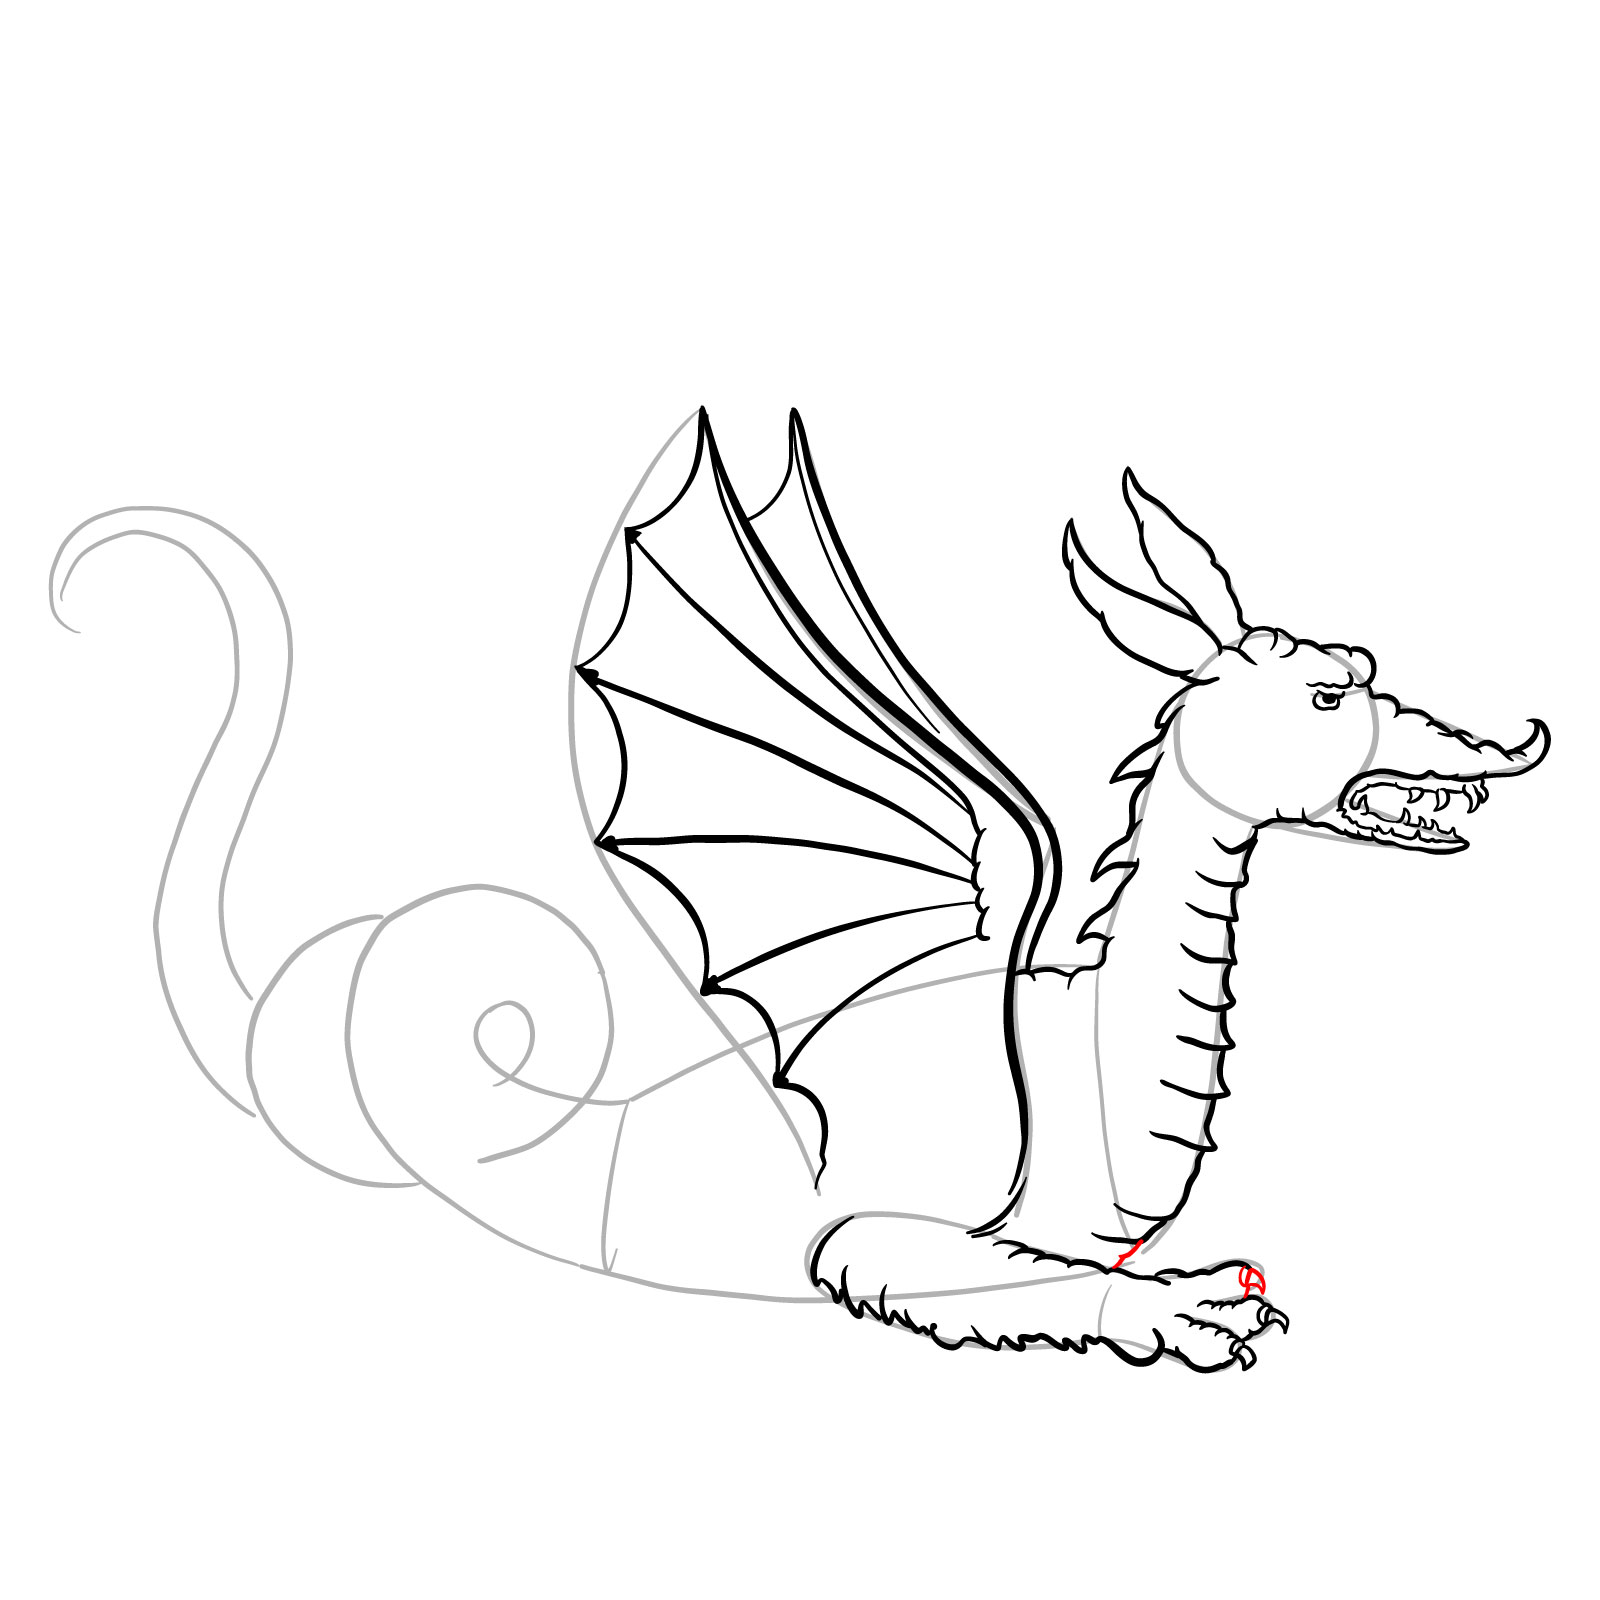 How to draw a Knucker dragon - step 22